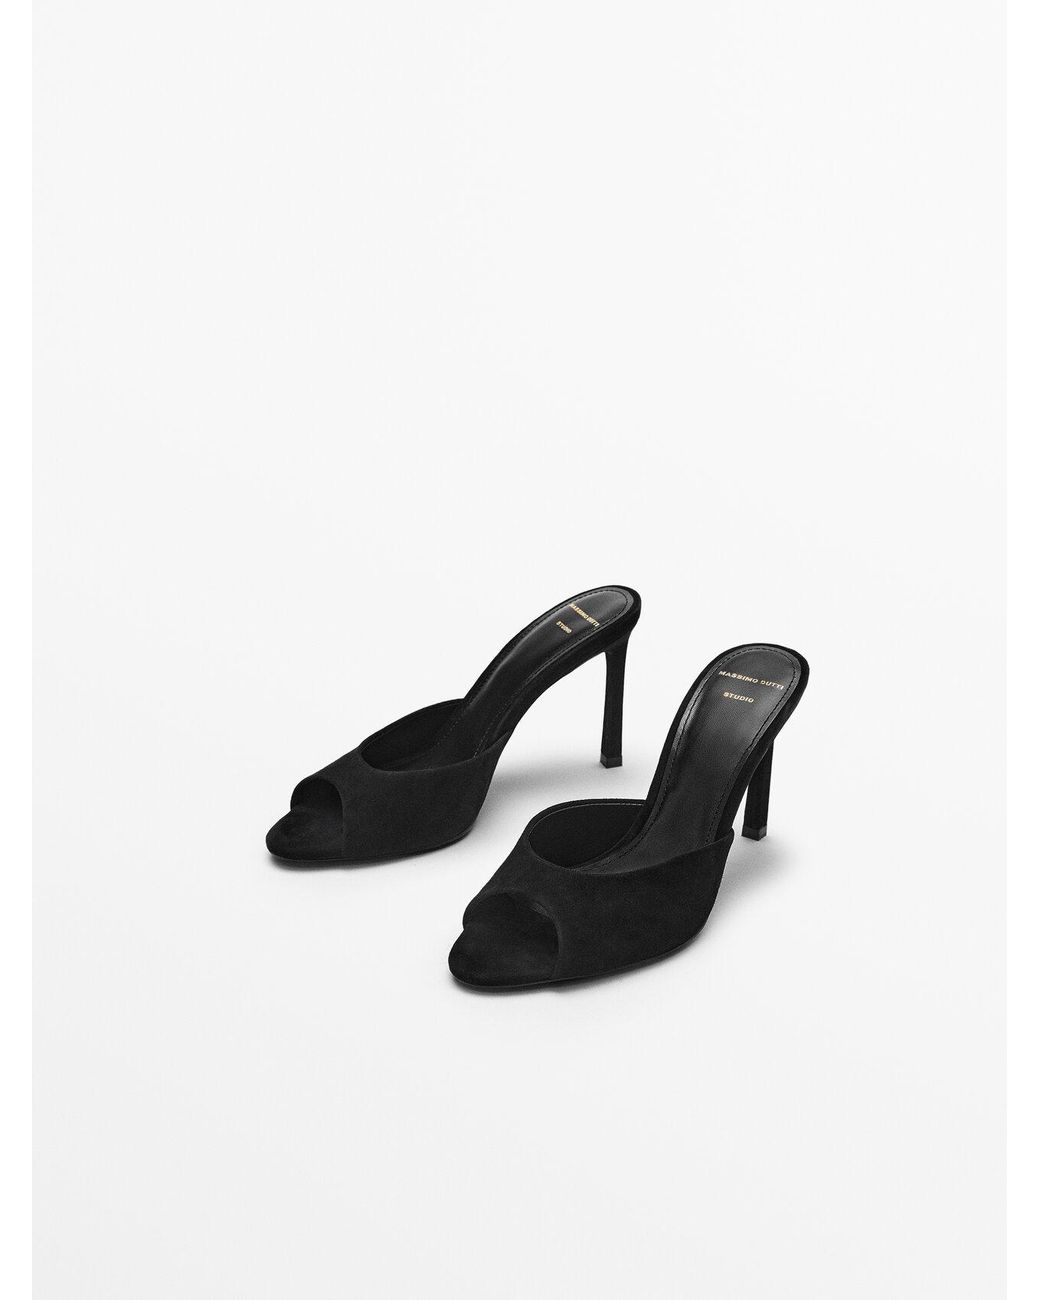 Vintage Steve Madden Platform Shoes High Heeled Black Suede Mary Jane Pumps  Womens Size 6.5 Ankle Strap Shoes - Etsy